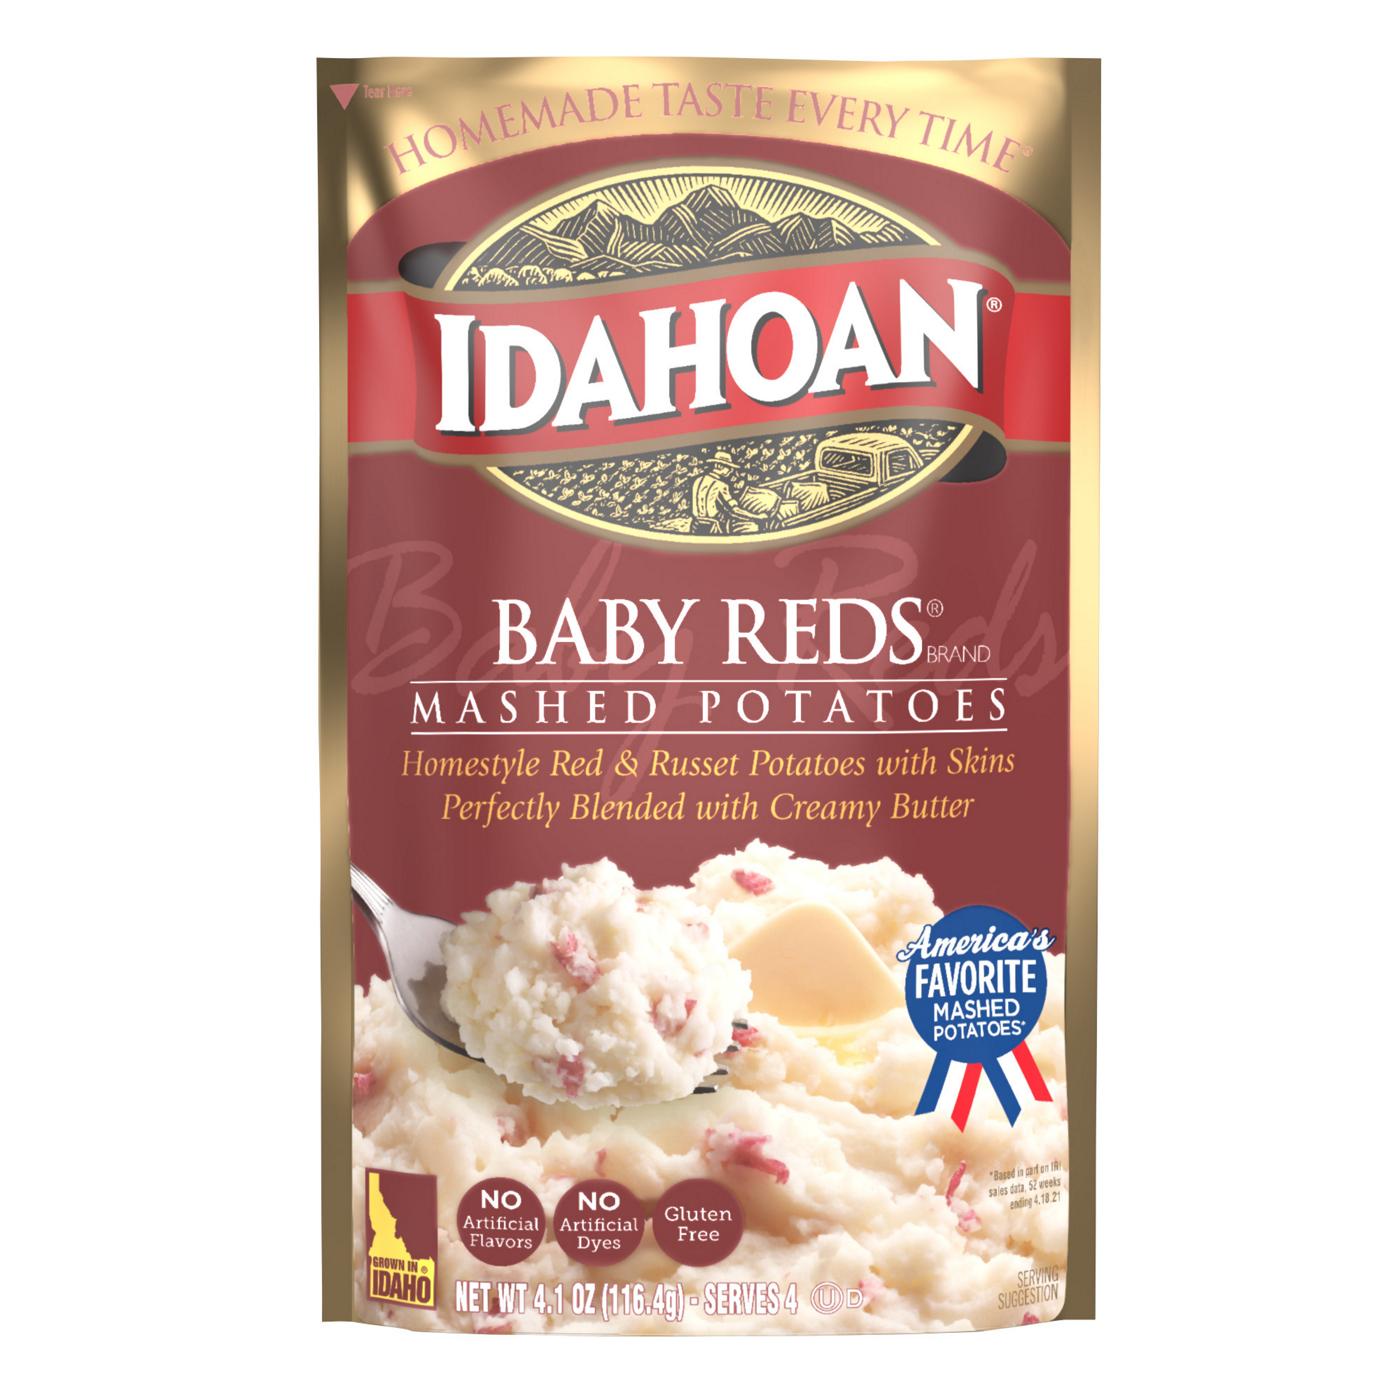 Idahoan Baby Reds Mashed Potatoes; image 1 of 5